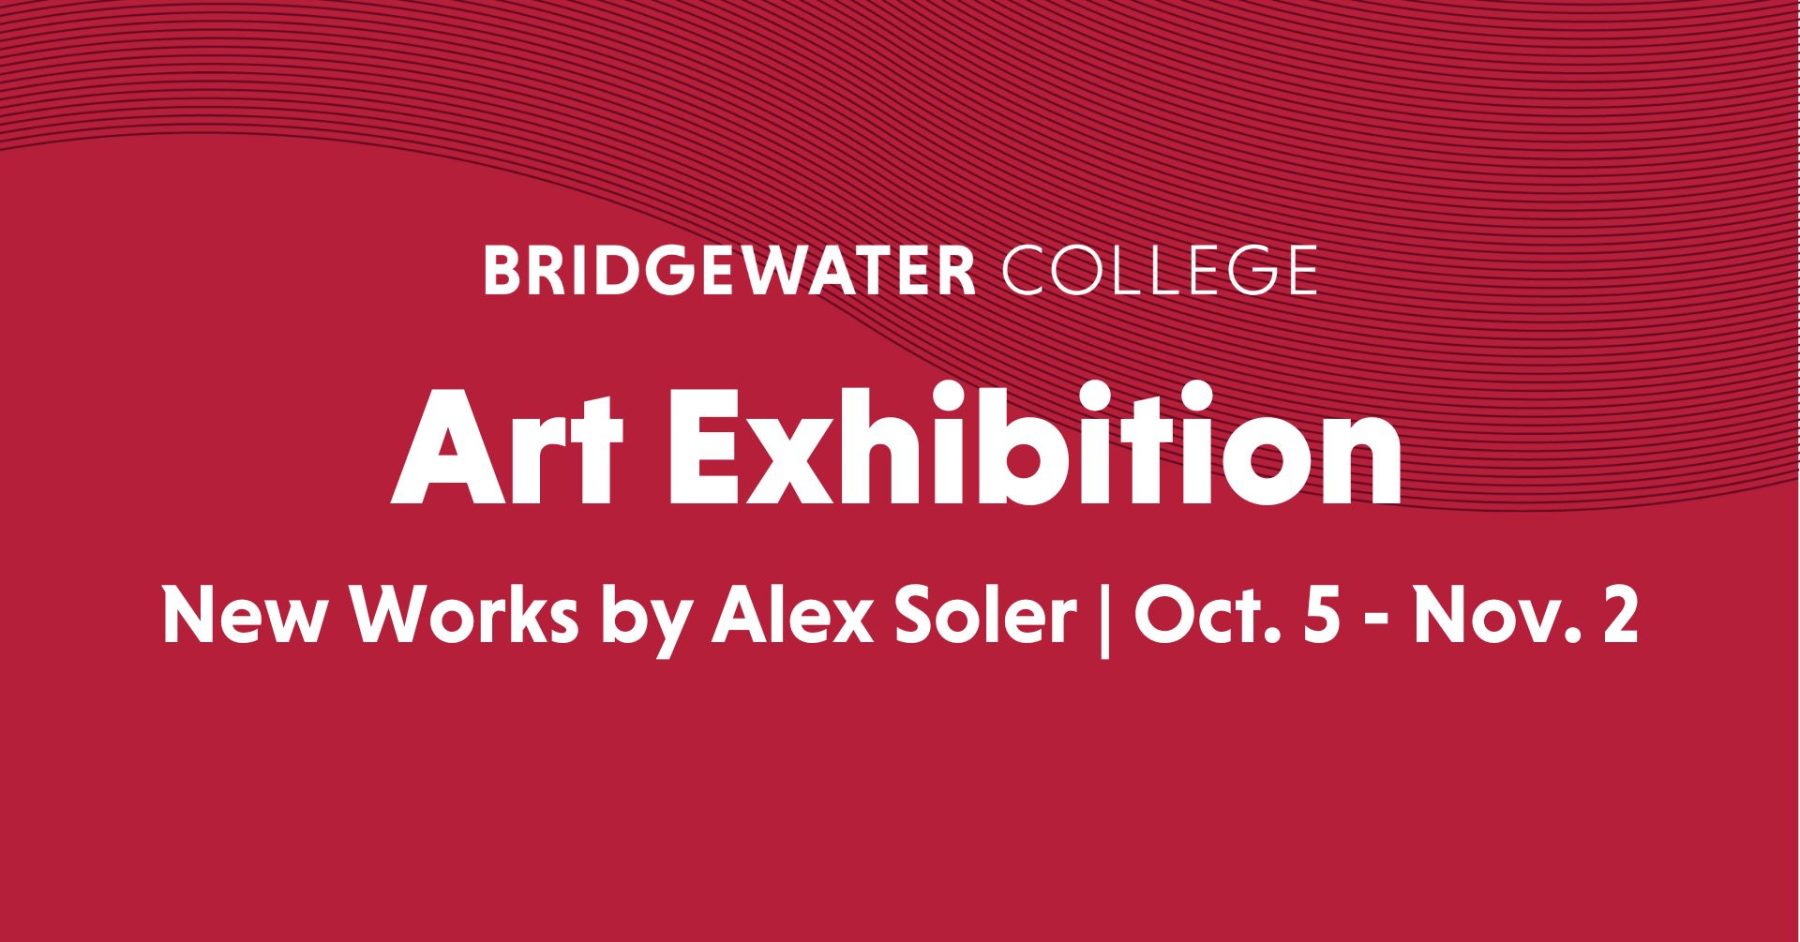 a red graphic that reads: Bridgewater College Art Exhibition New Works by Alex Soler Oct. 5 - Nov. 2